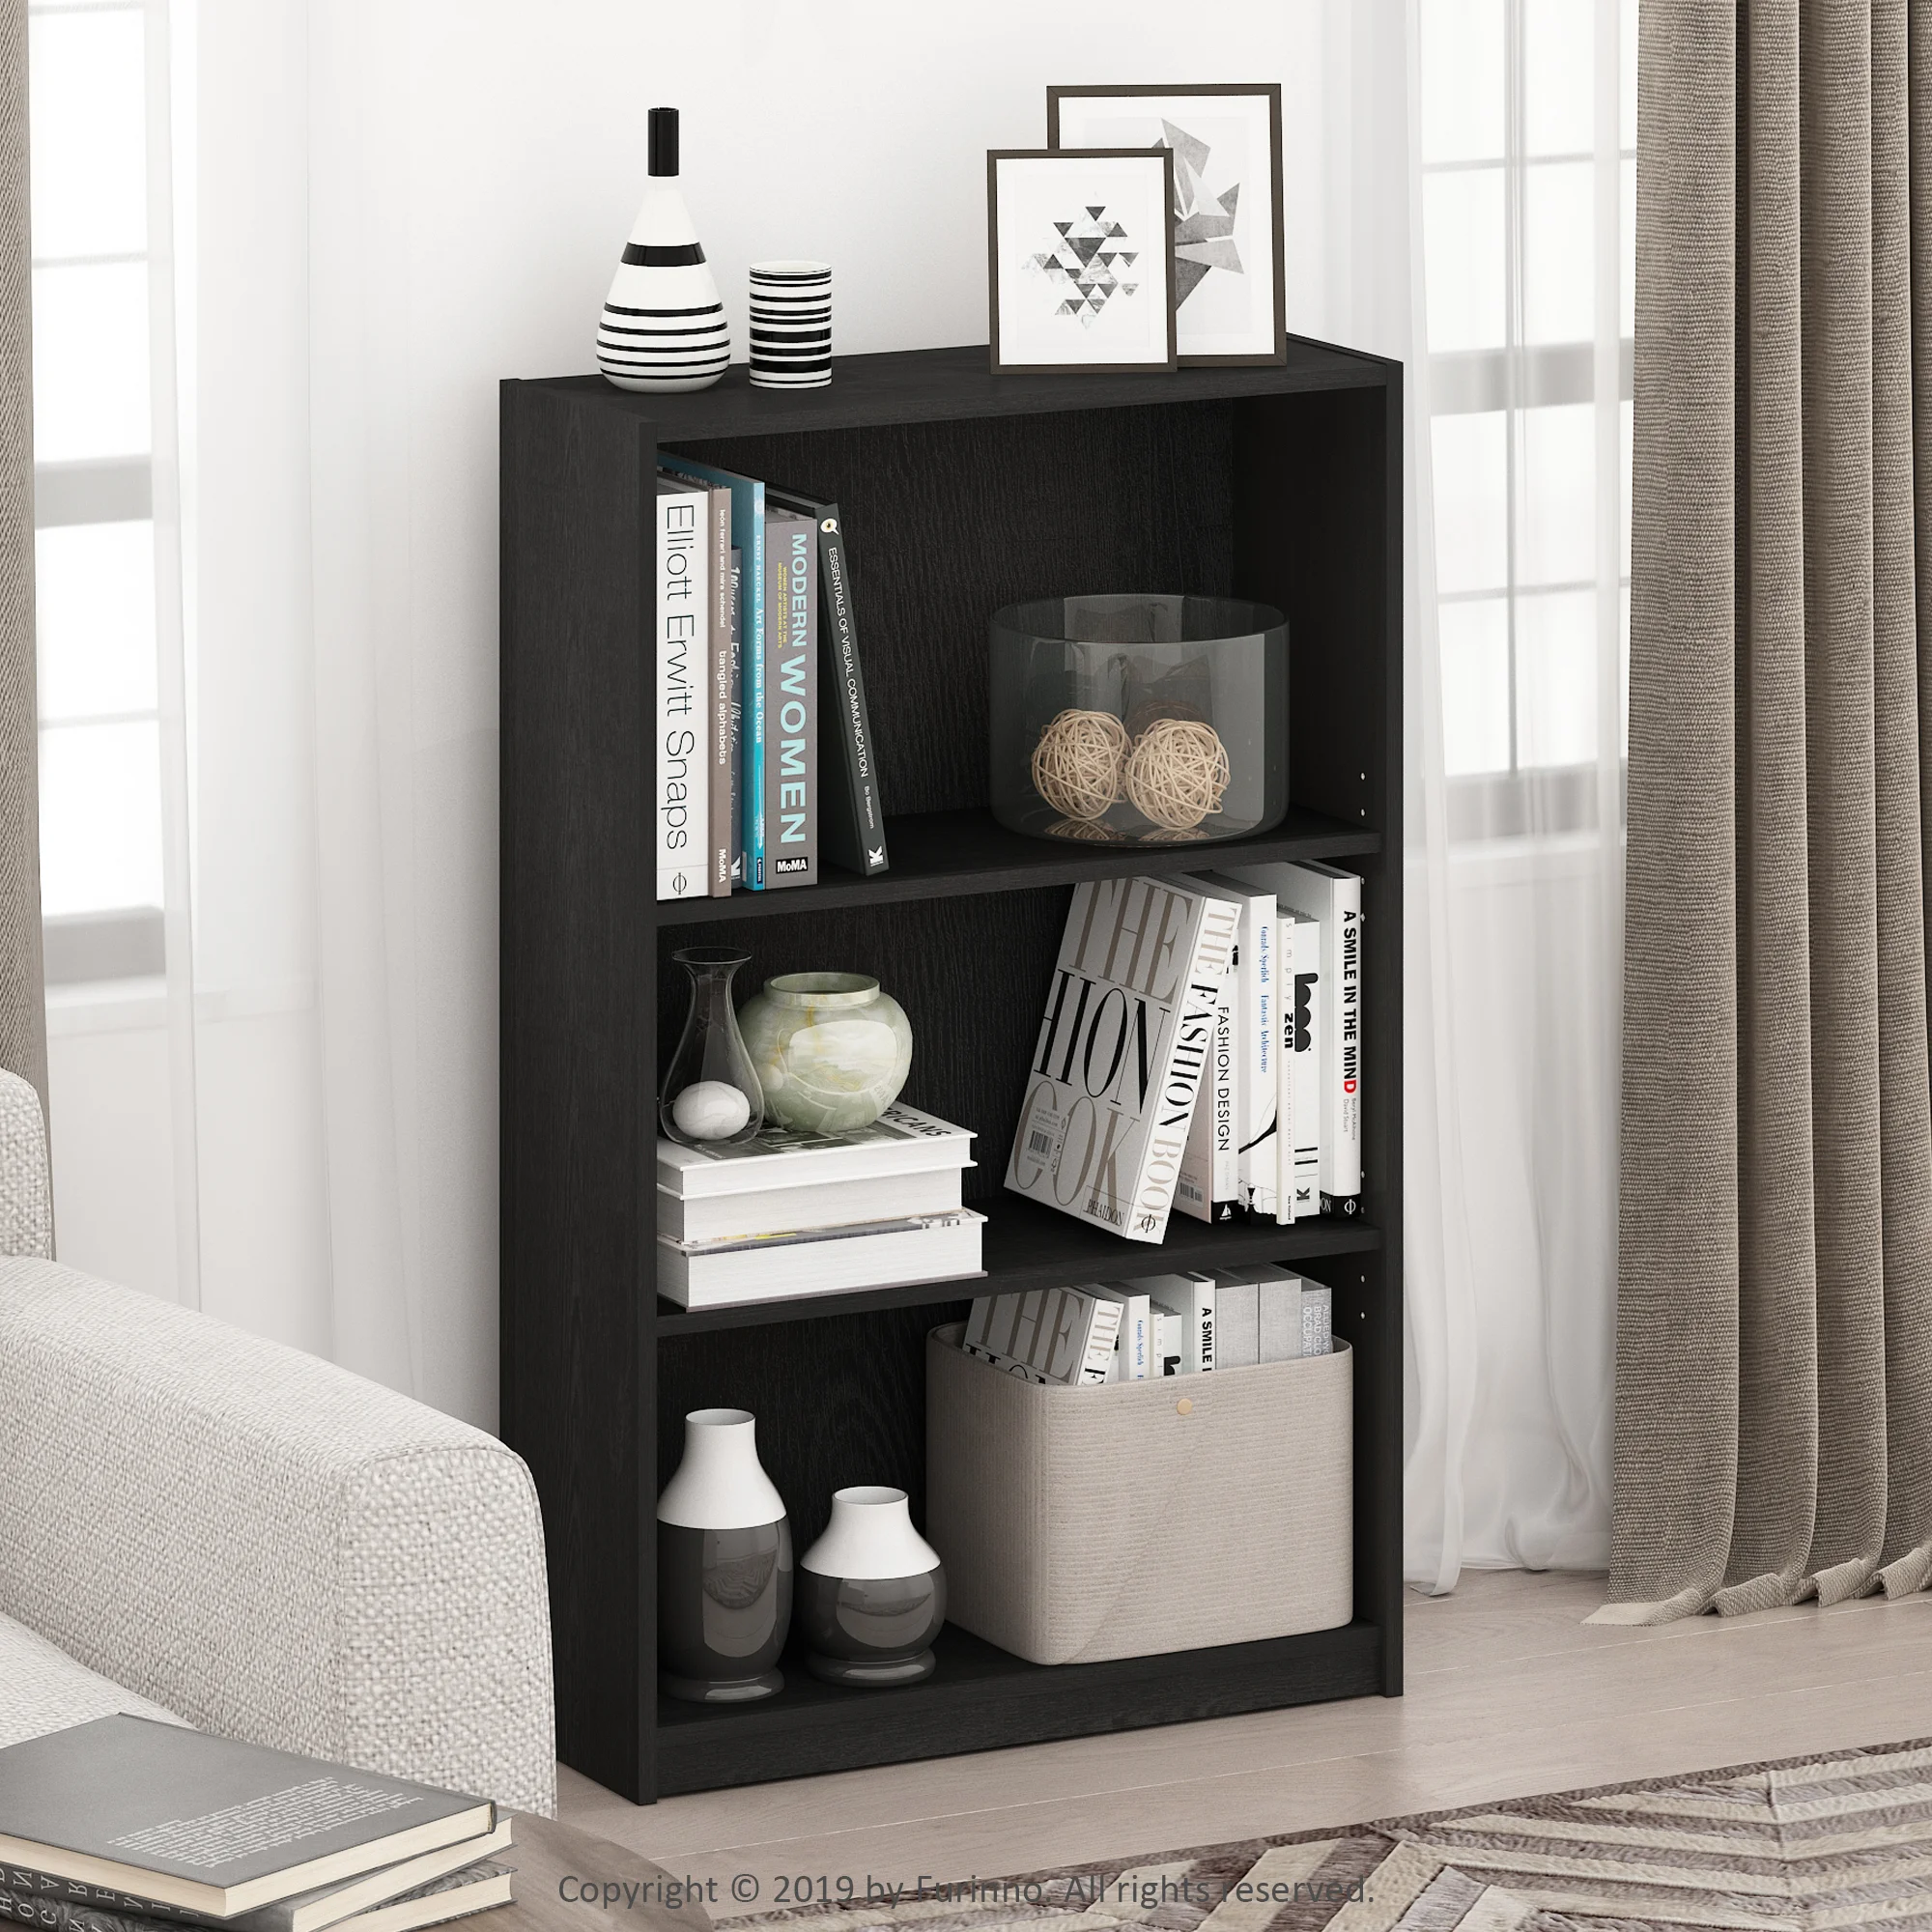 Furinno JAYA Simple Home 3-Tier Adjustable Shelf Bookcase